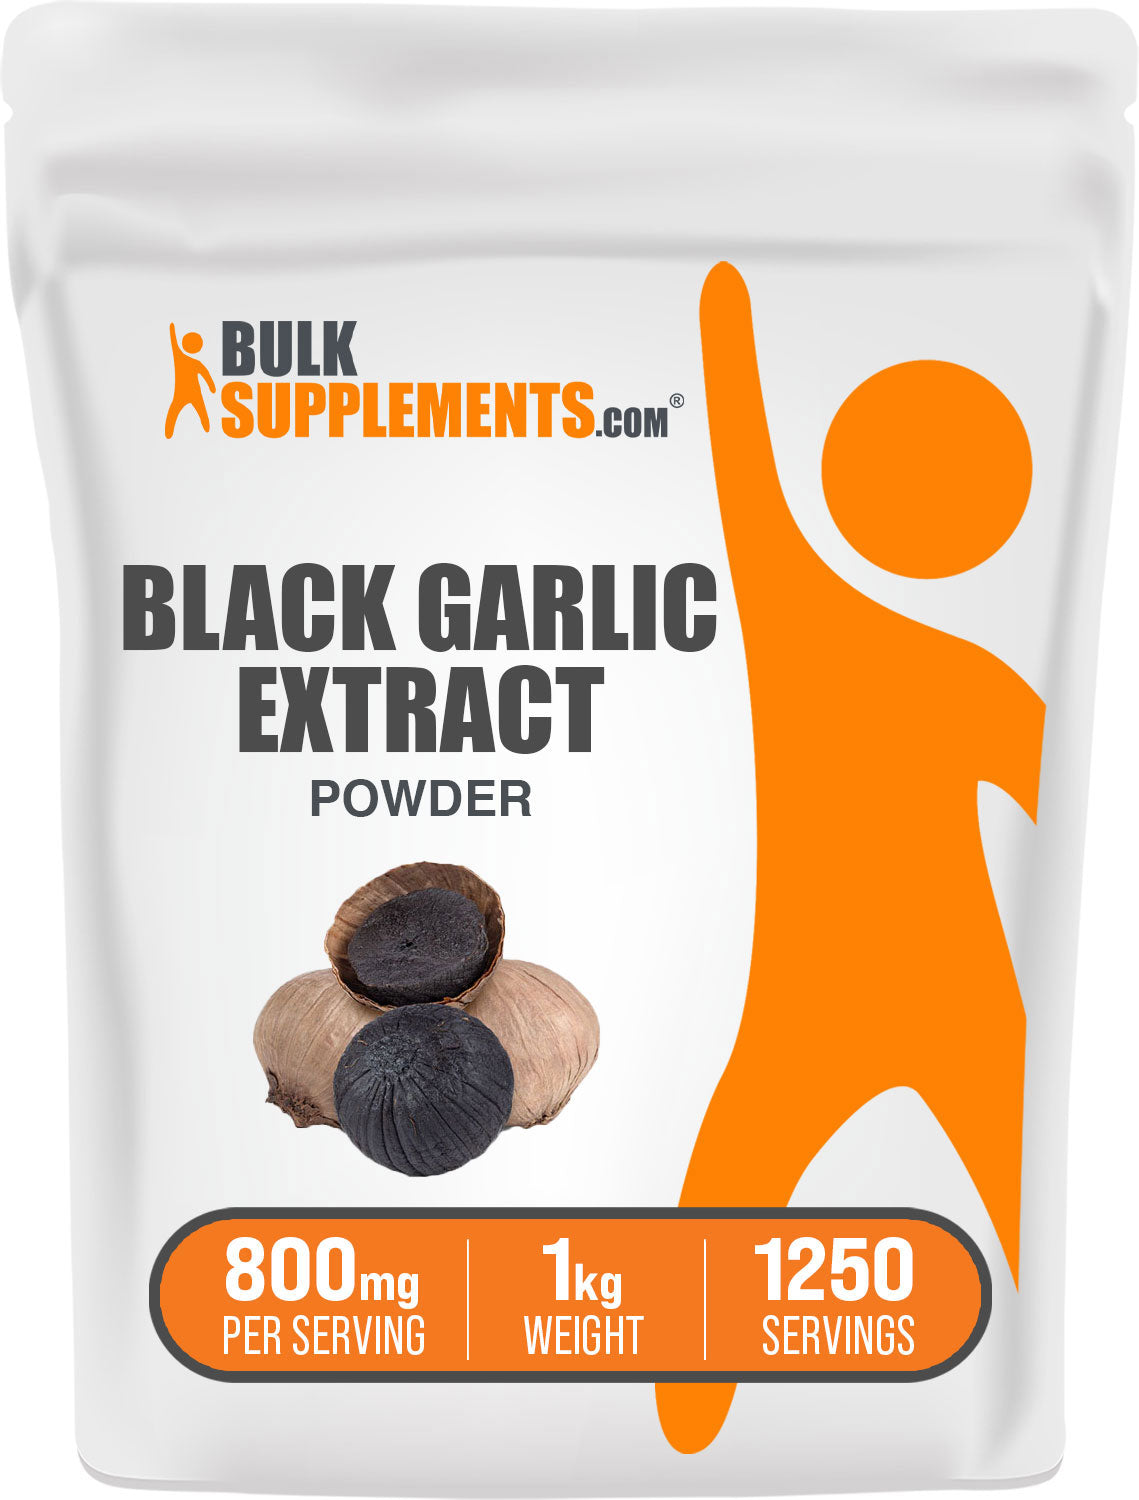 BulkSupplements.com Black garlic extract powder bag 1kg